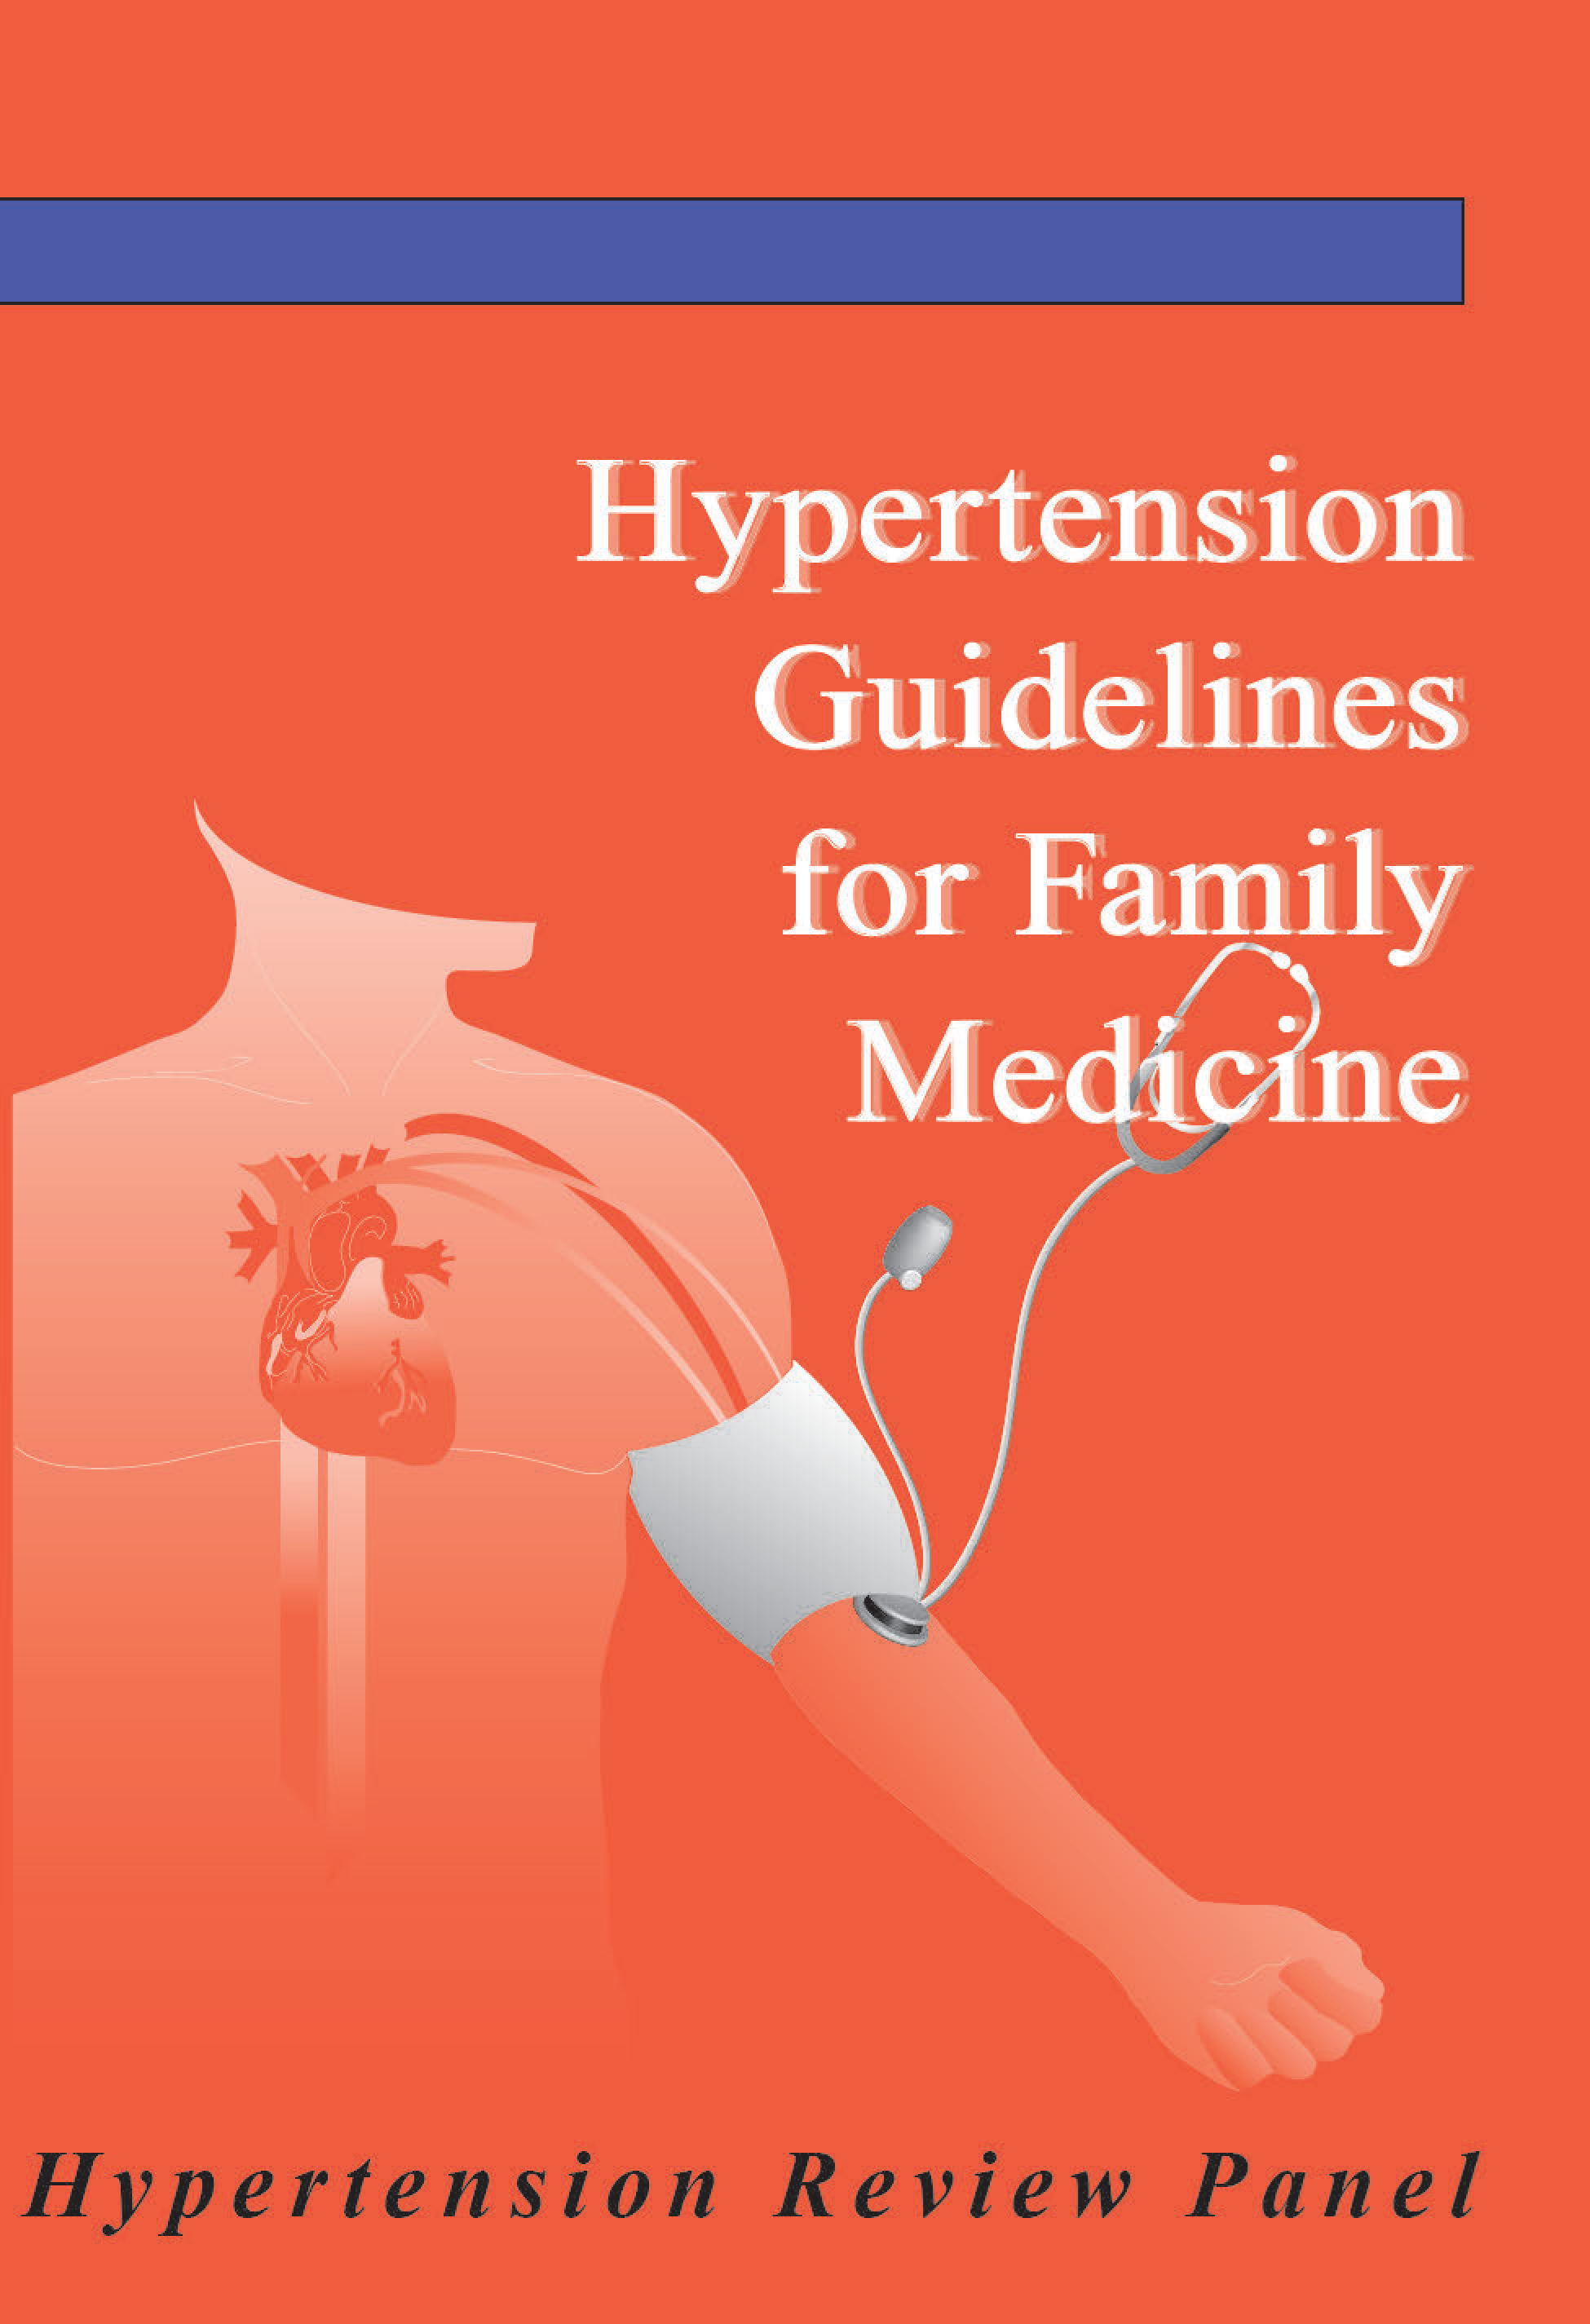 hypertension guidelines canada pocket guide)